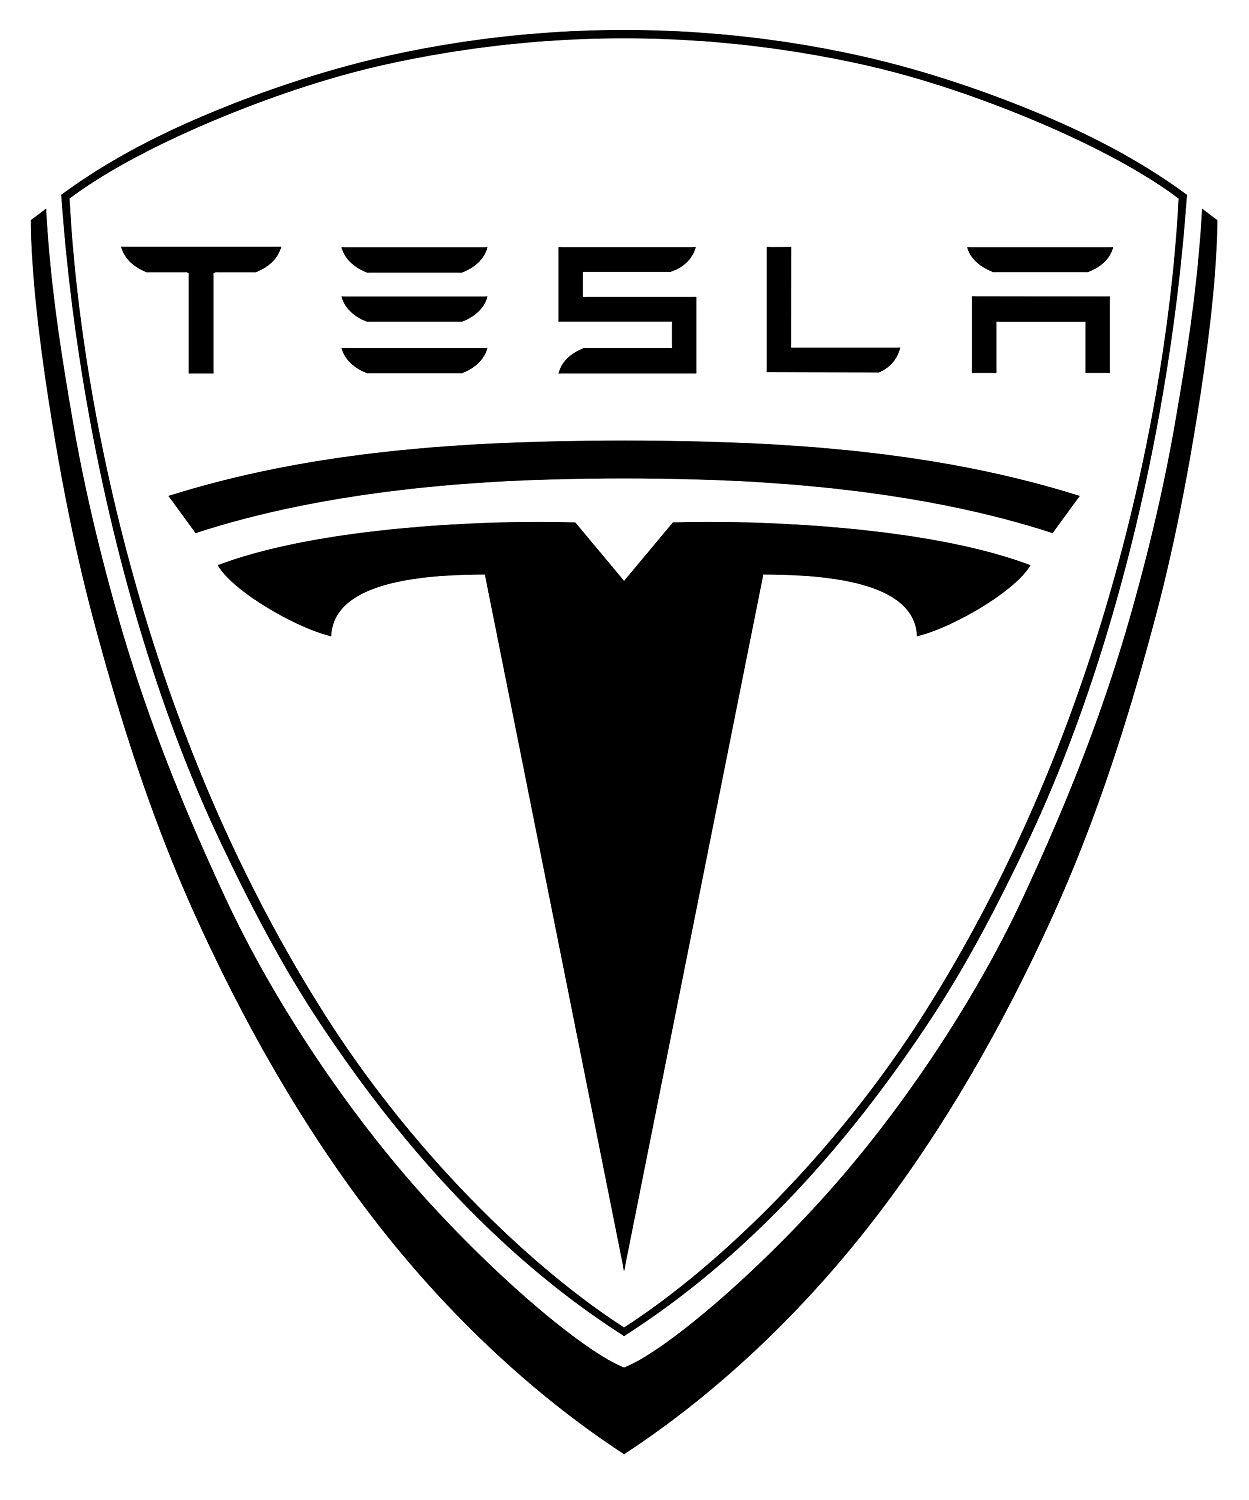 Tesla Brand Logo - Amazon.com : Large Tesla Logo Wall Decal Decals Vinyl Sticker Car